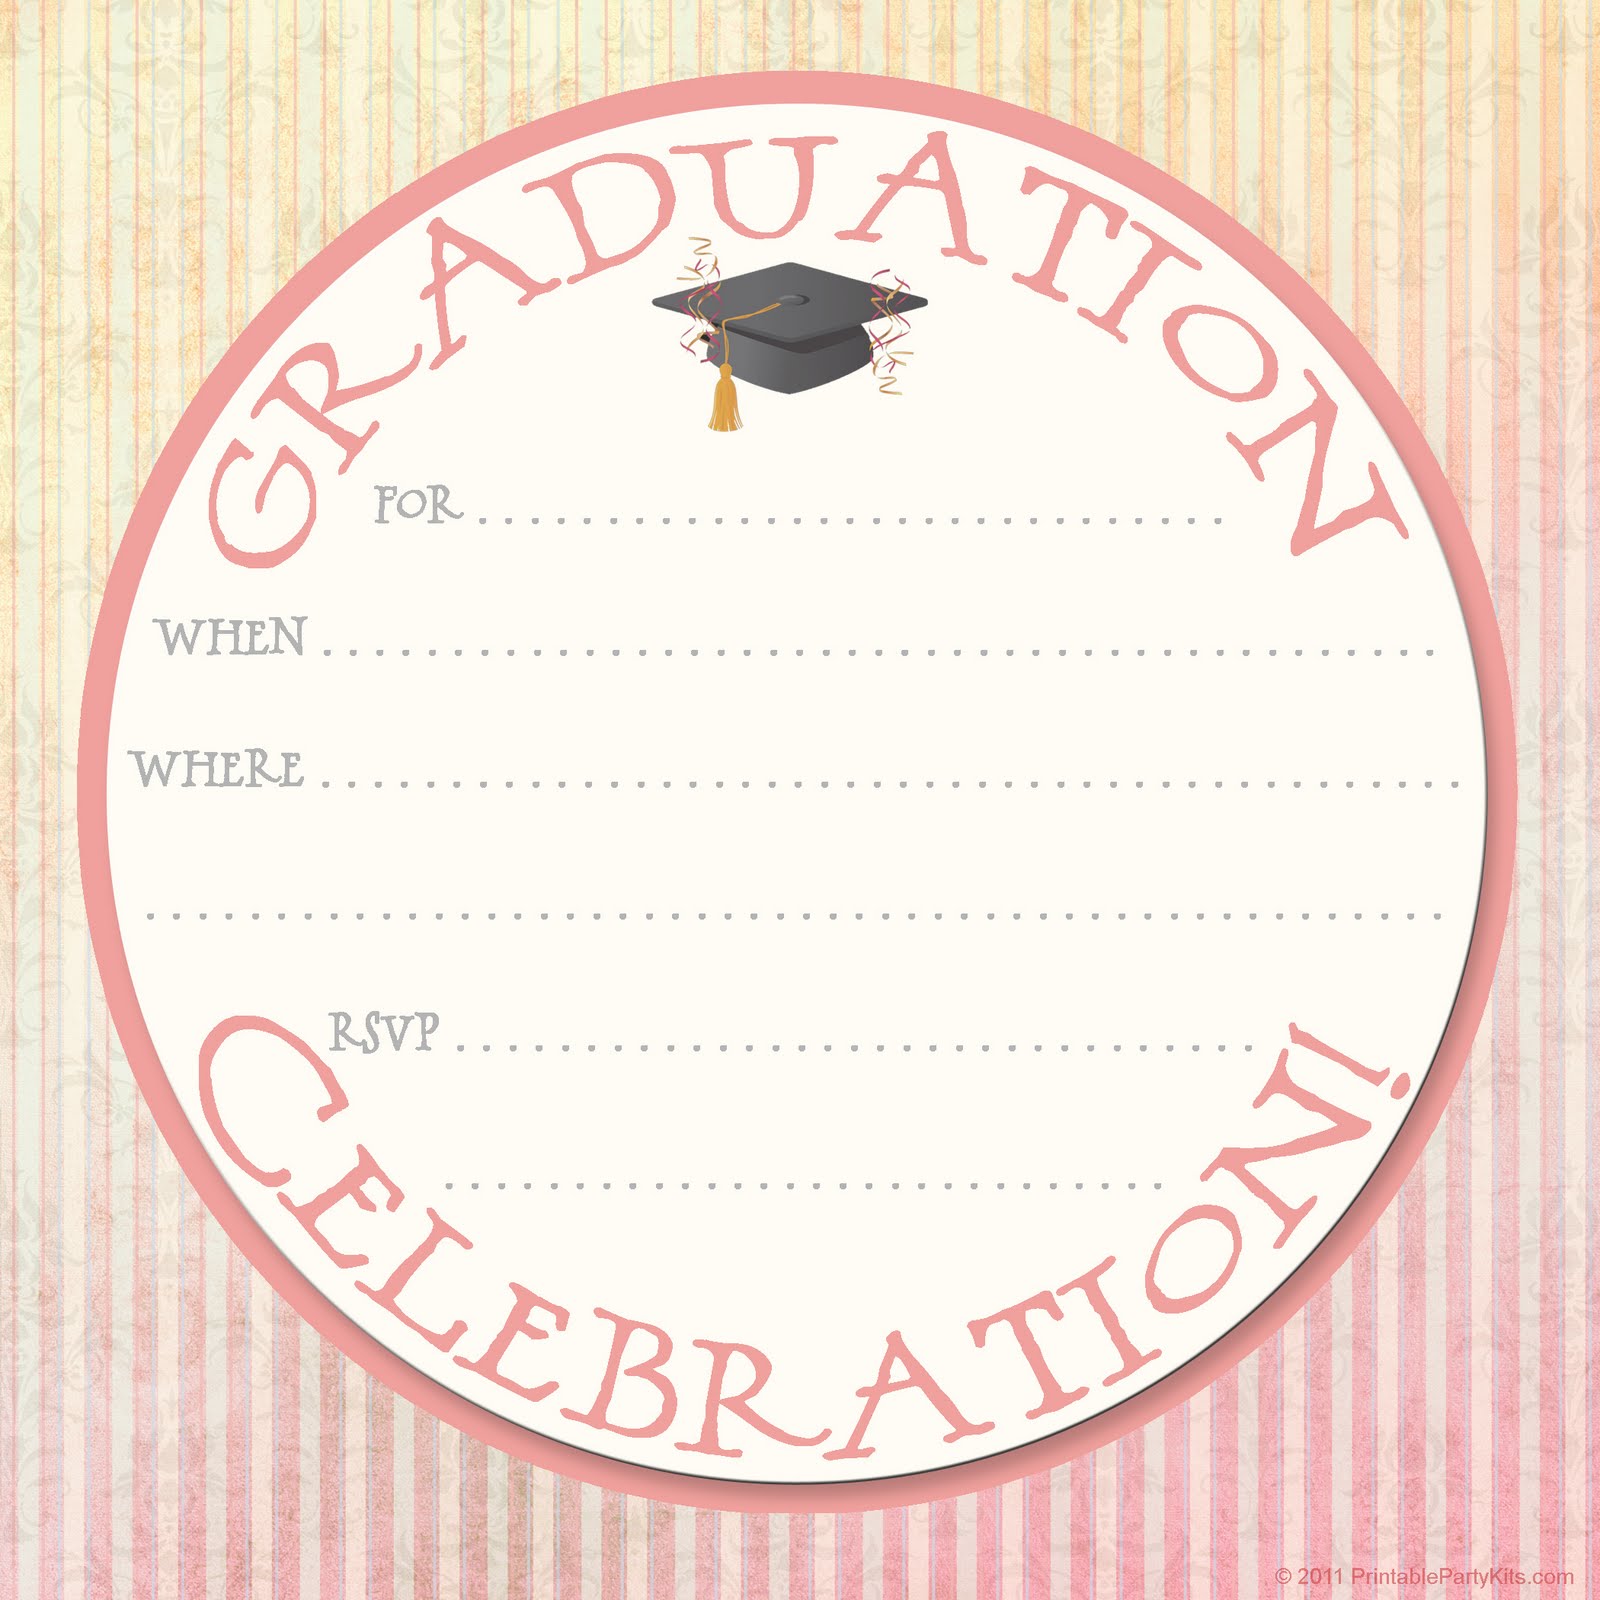 Free Printable Party Invitations: Graduation Party Announcement Design